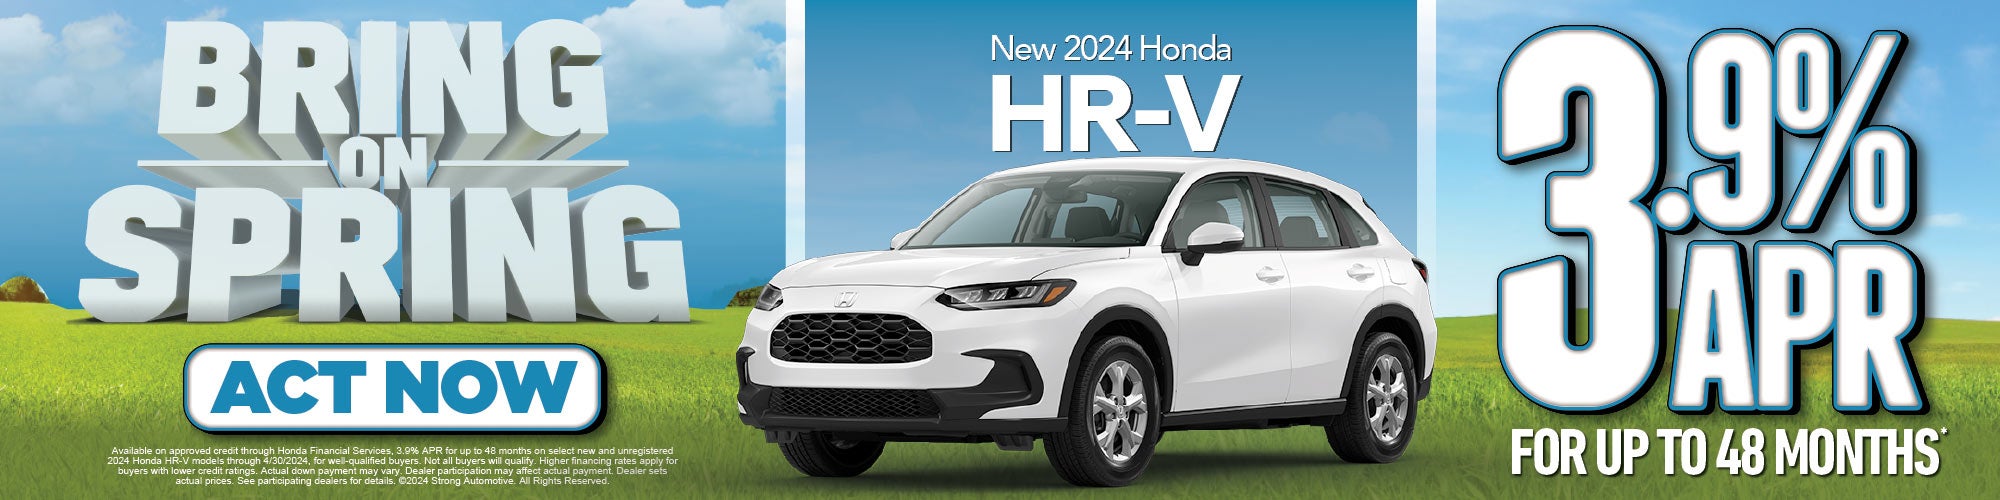 2024 Honda HR-V 3.9% APR for up to 48 months 